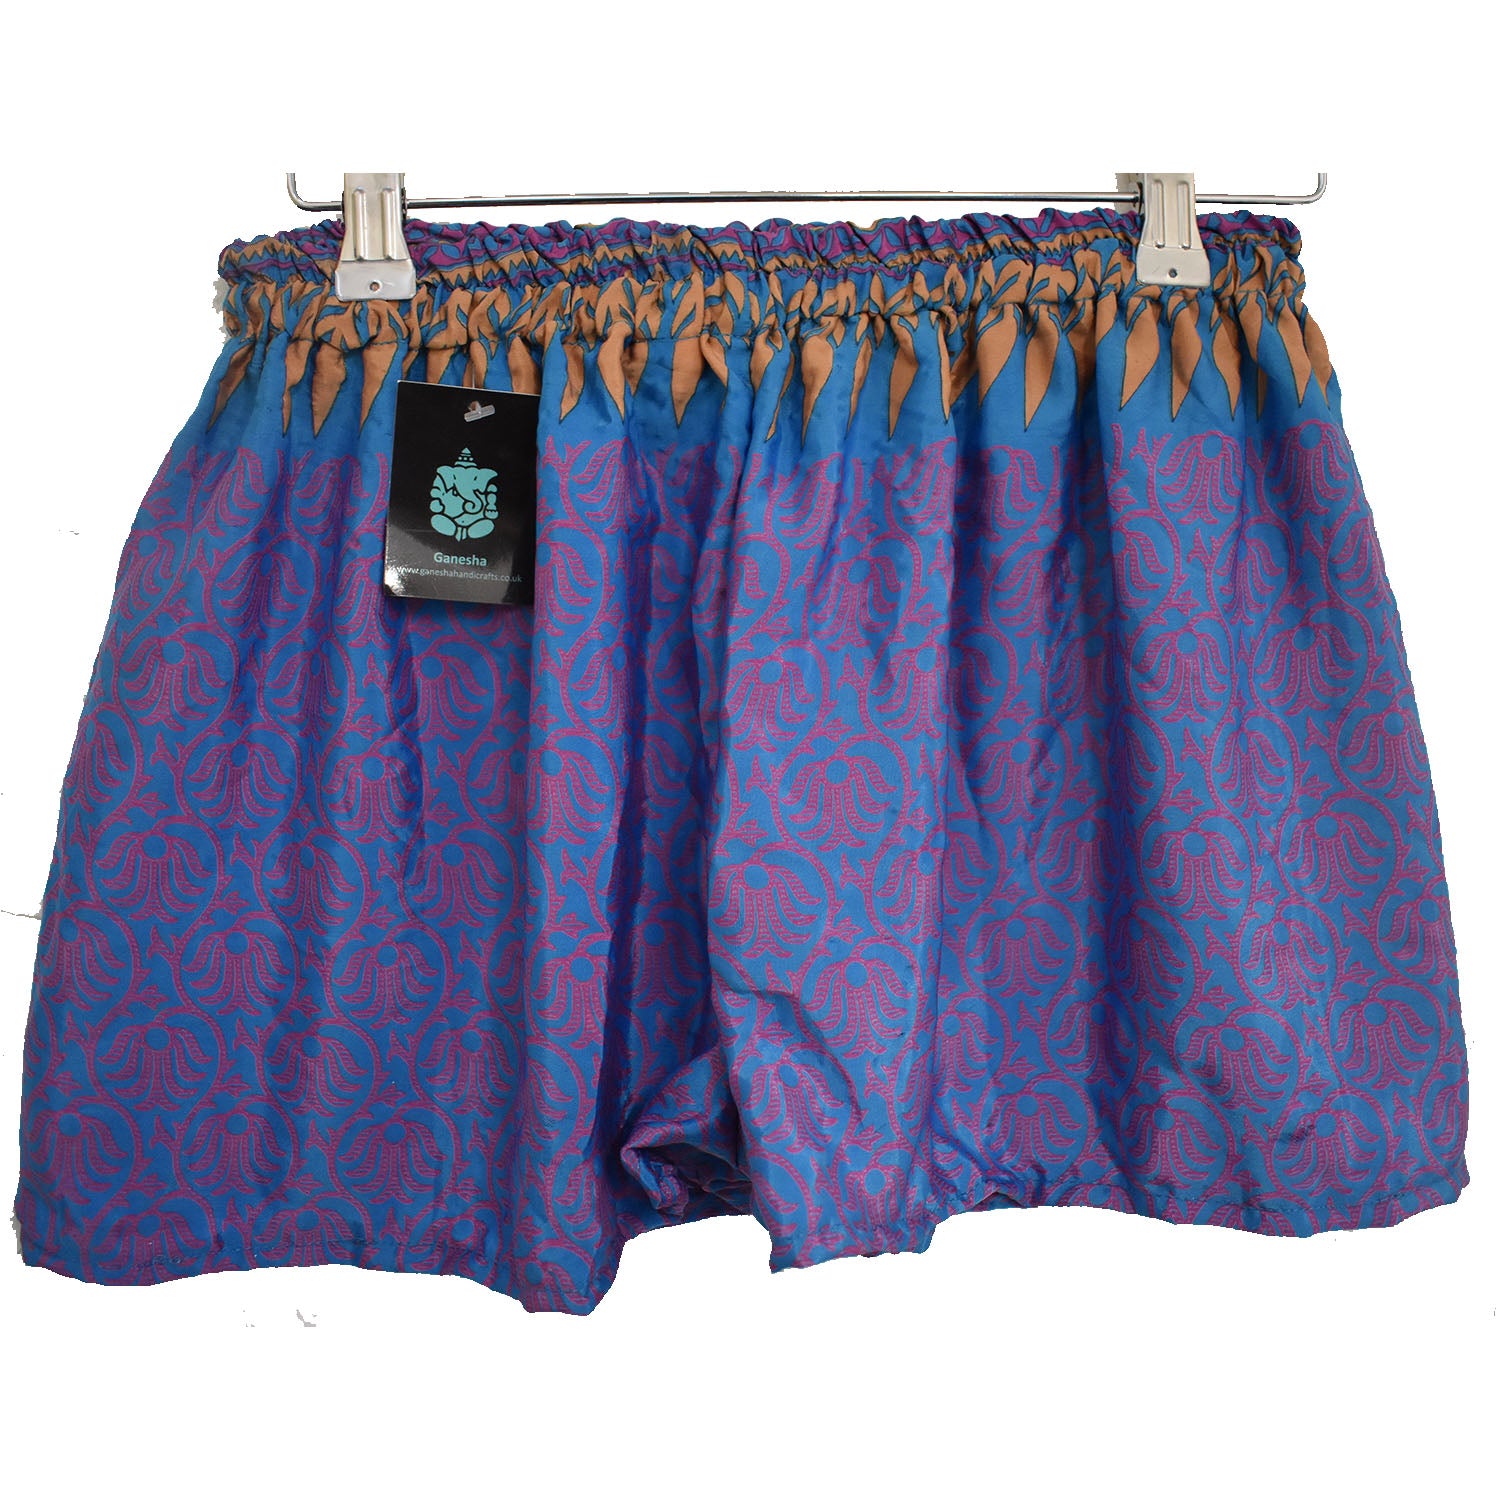 Ganesha Handicrafts Summer Silk Shorts, Shorts, Designed Shorts, Silk Shorts, Summer Shorts, Branded Shorts